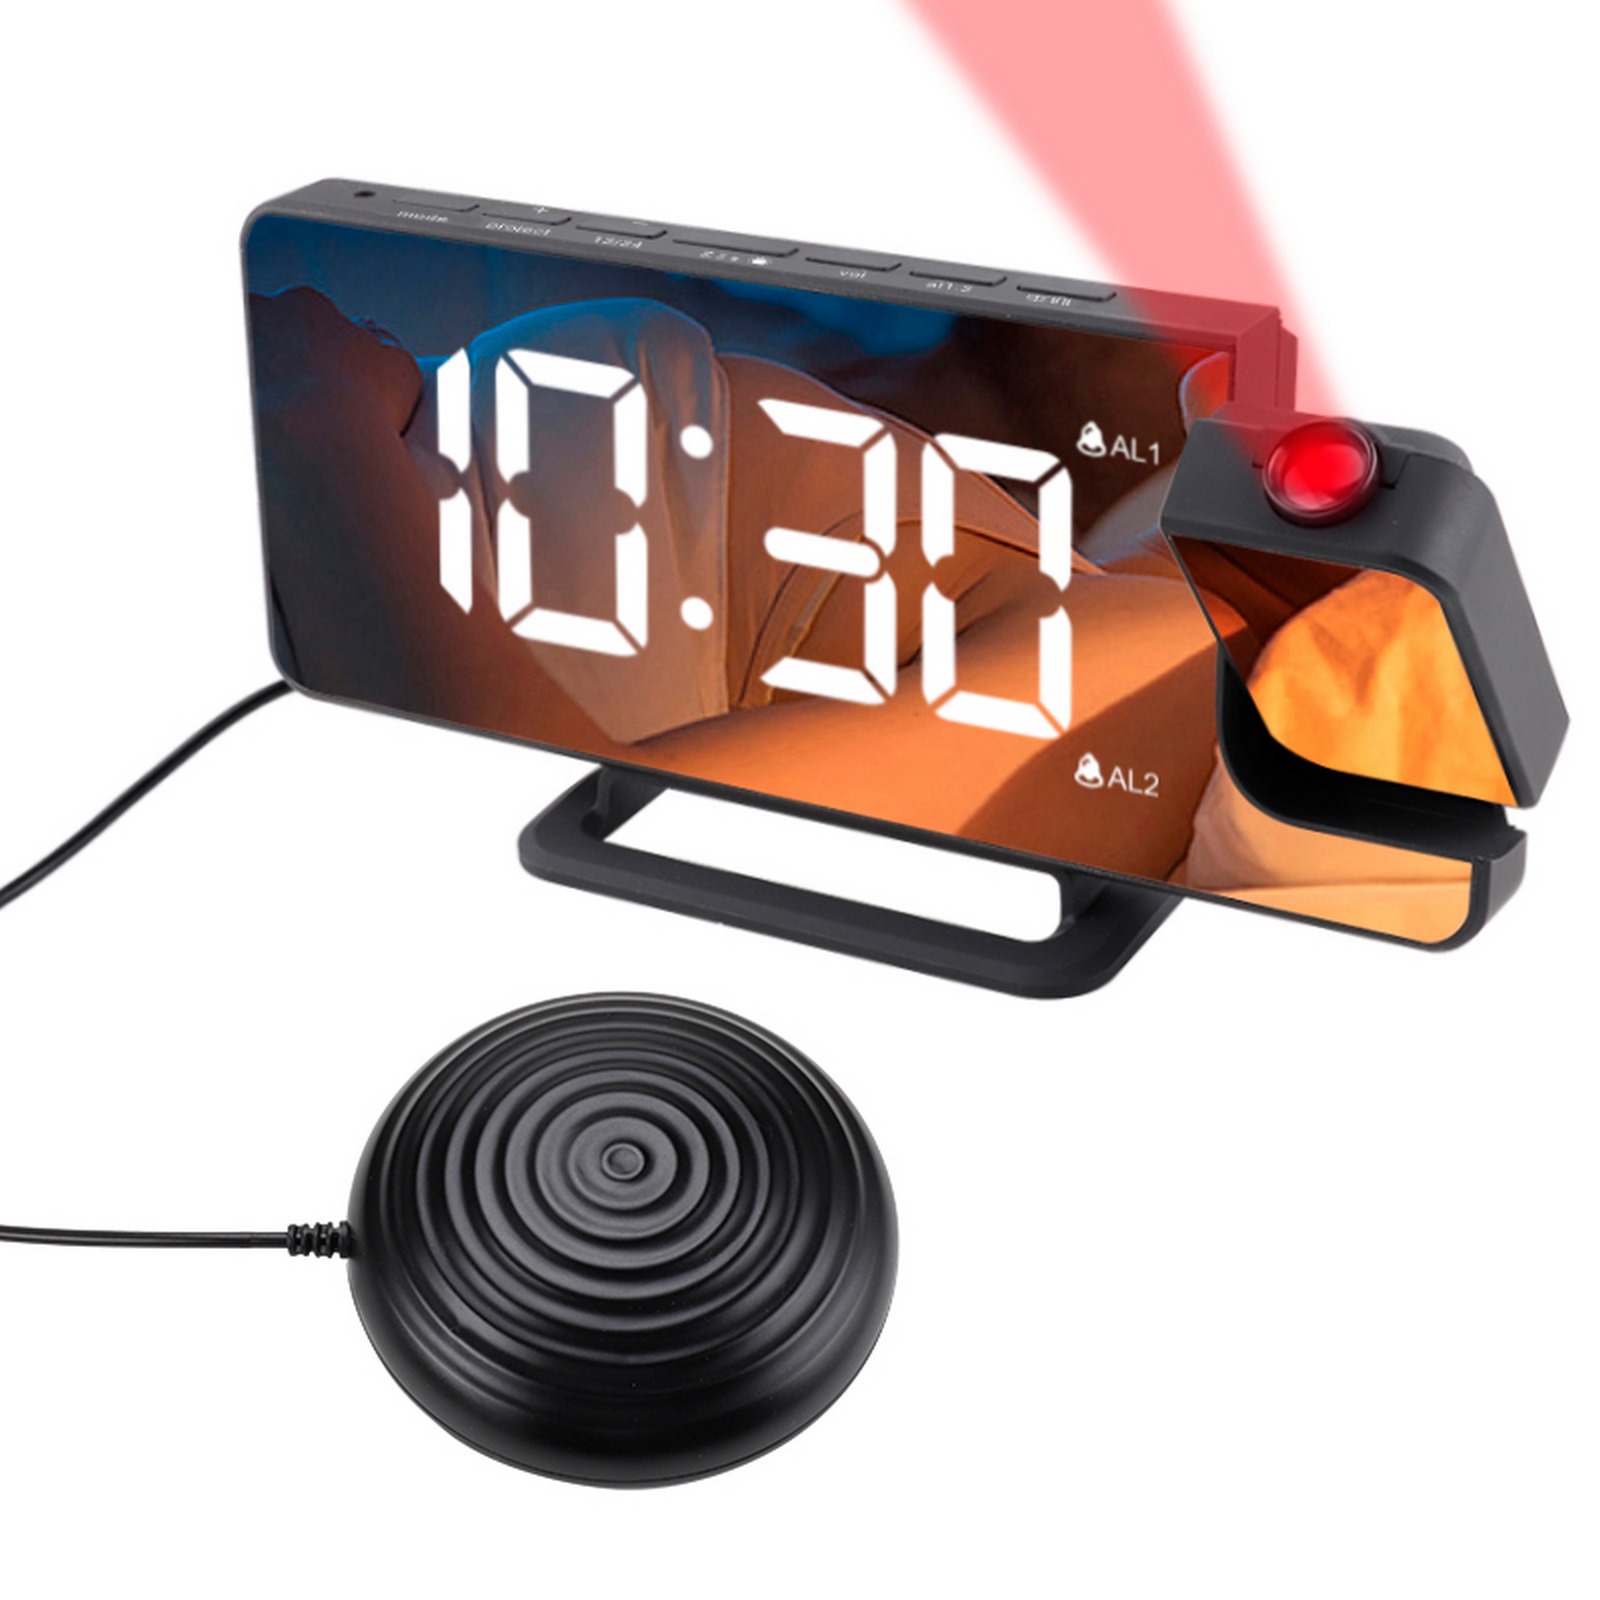 LED Digital Alarm Clock Temperature Date Display Desktop Mirror Clock Home Table Decoration Multifunctional Vibration Projection